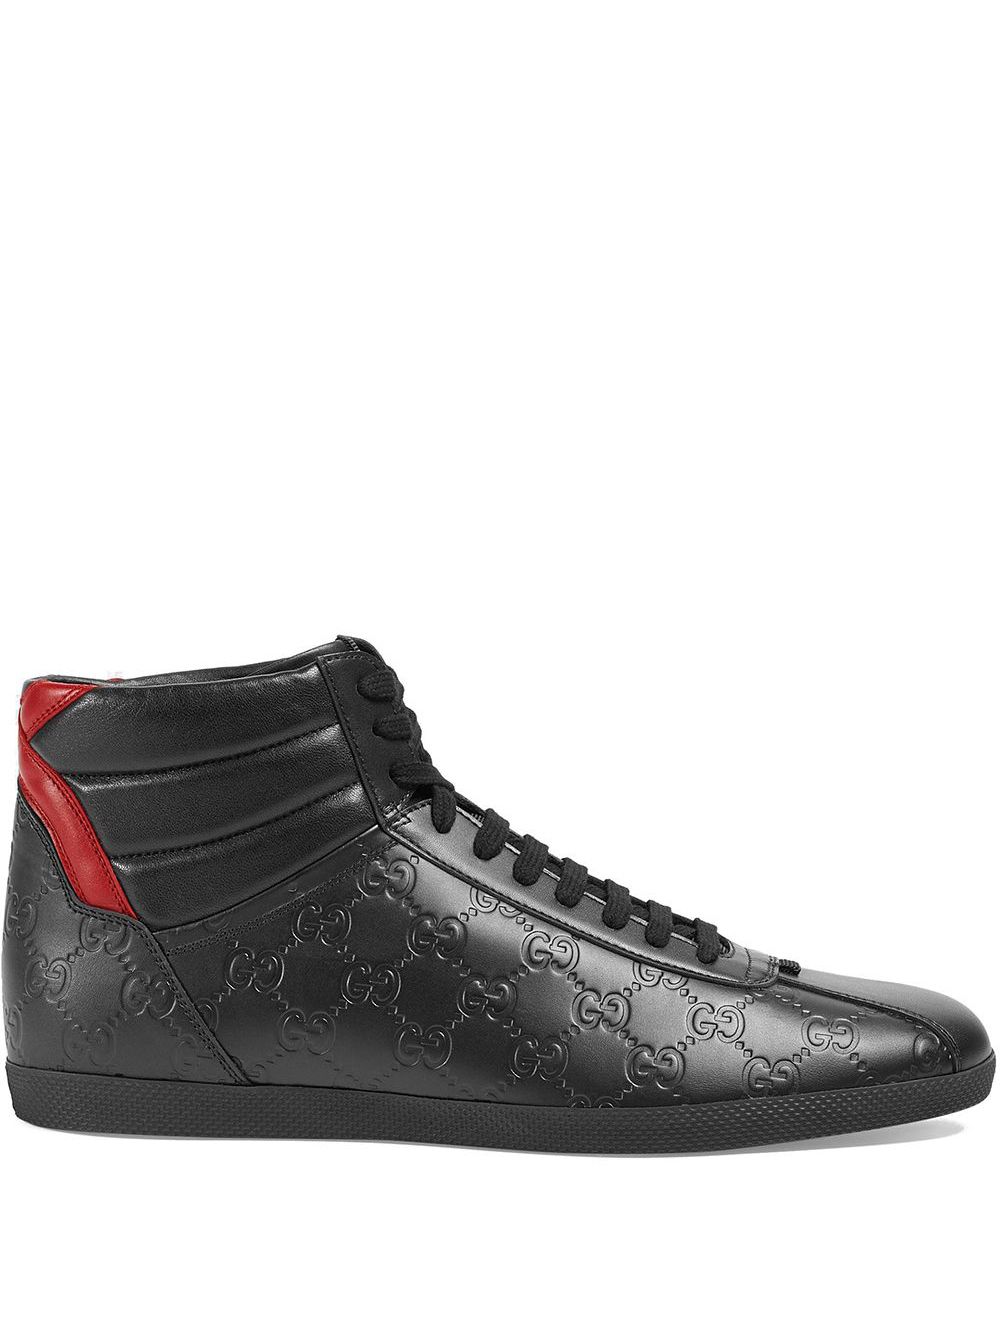 Gucci Gucci Signature high-top Sneakers - Farfetch